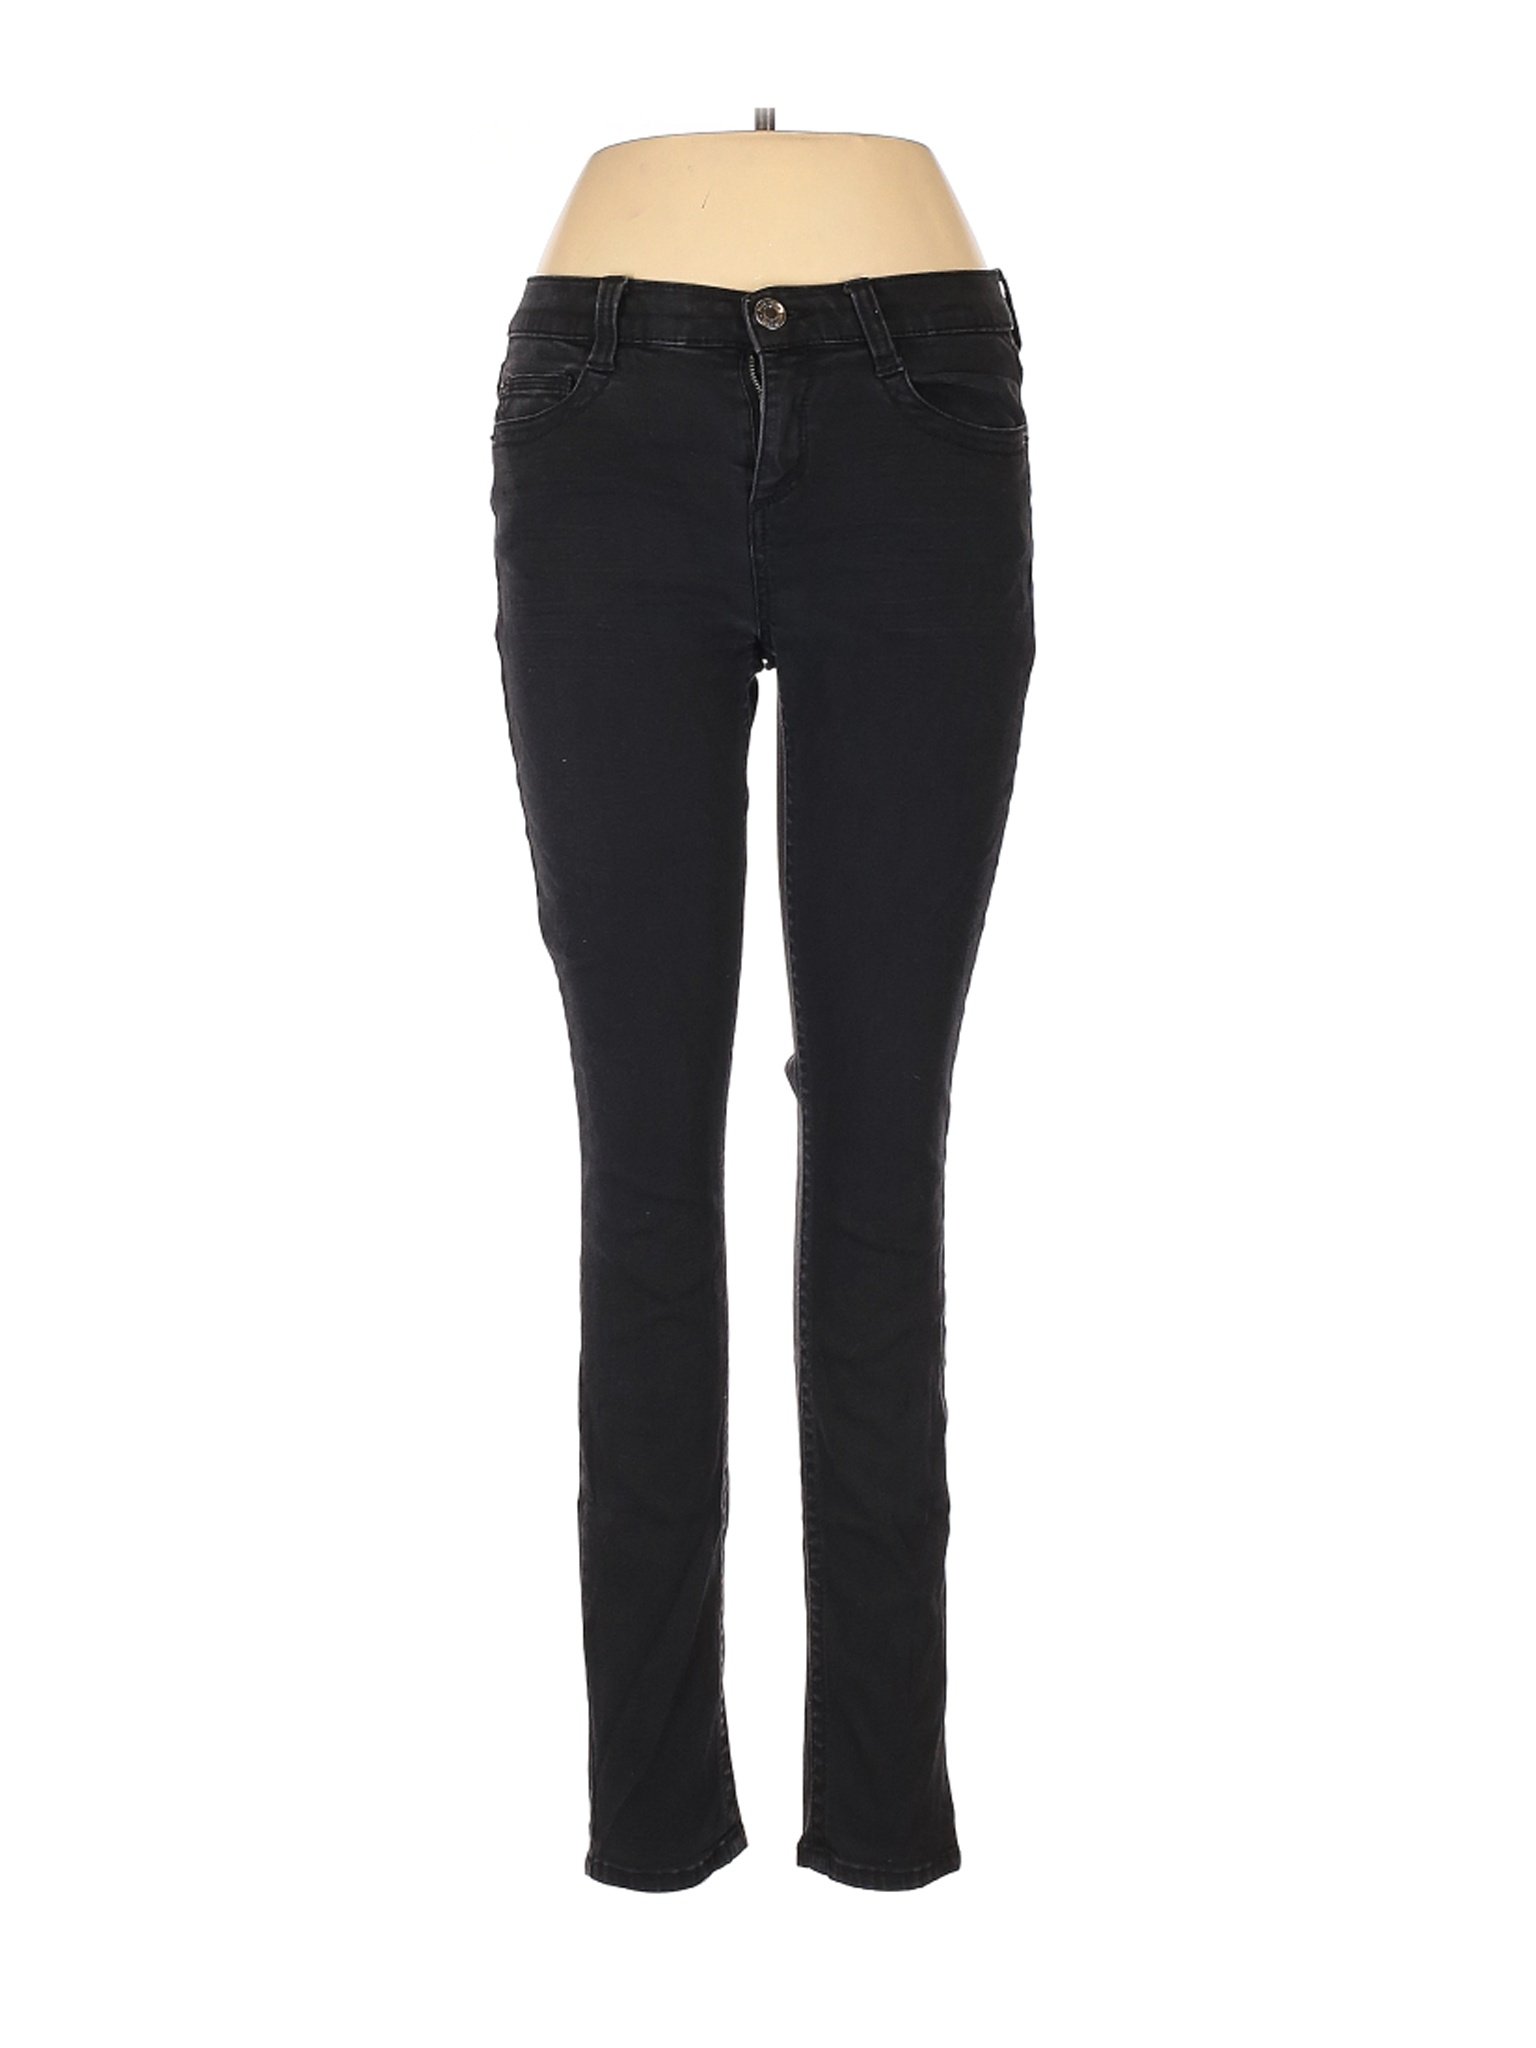 Mudd Women Black Jeans 11 | eBay